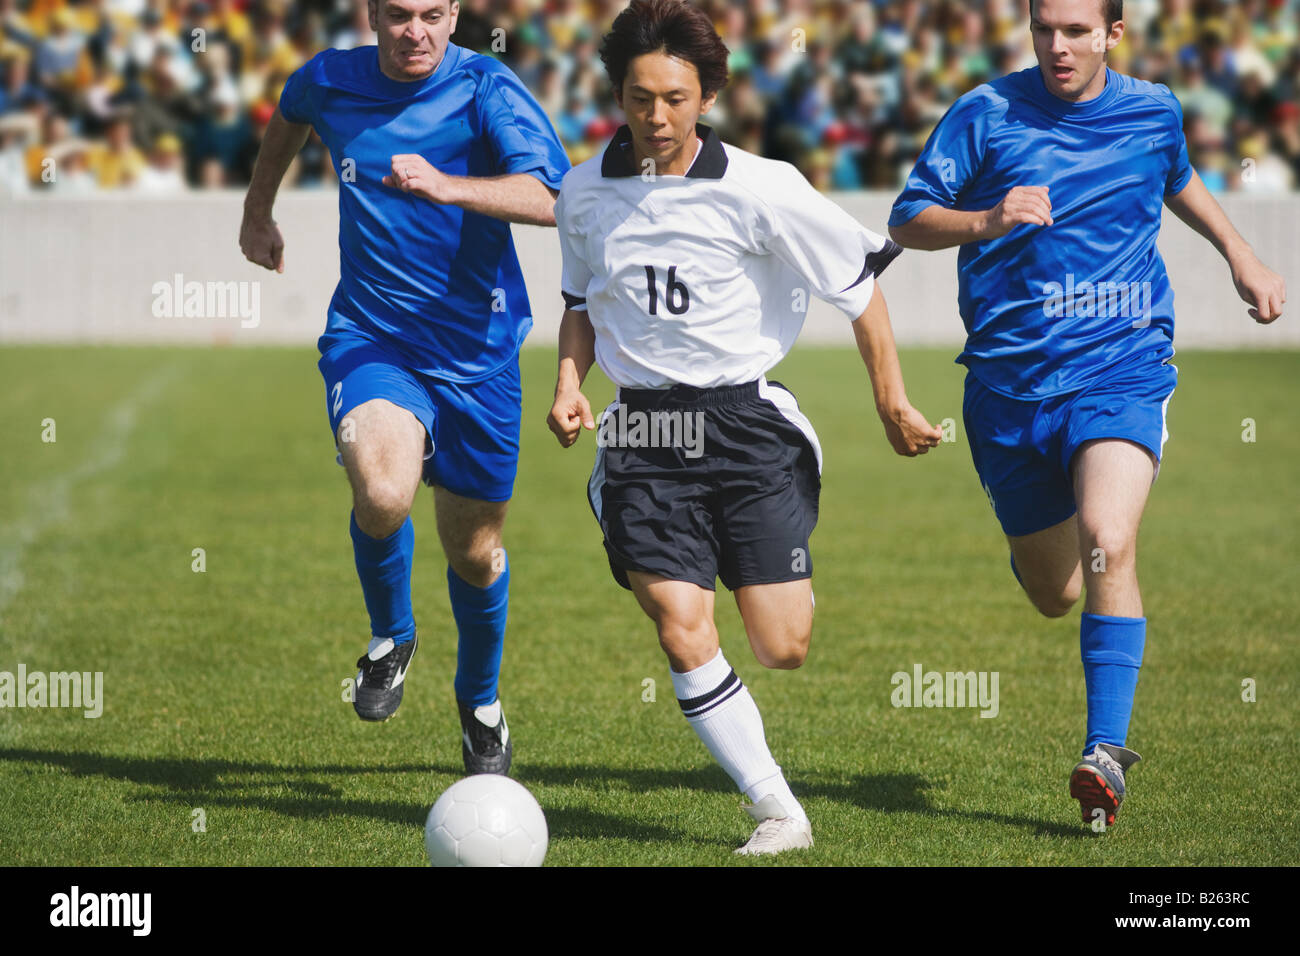 Soccer Player Dribbling Past Defenders Stock Photo